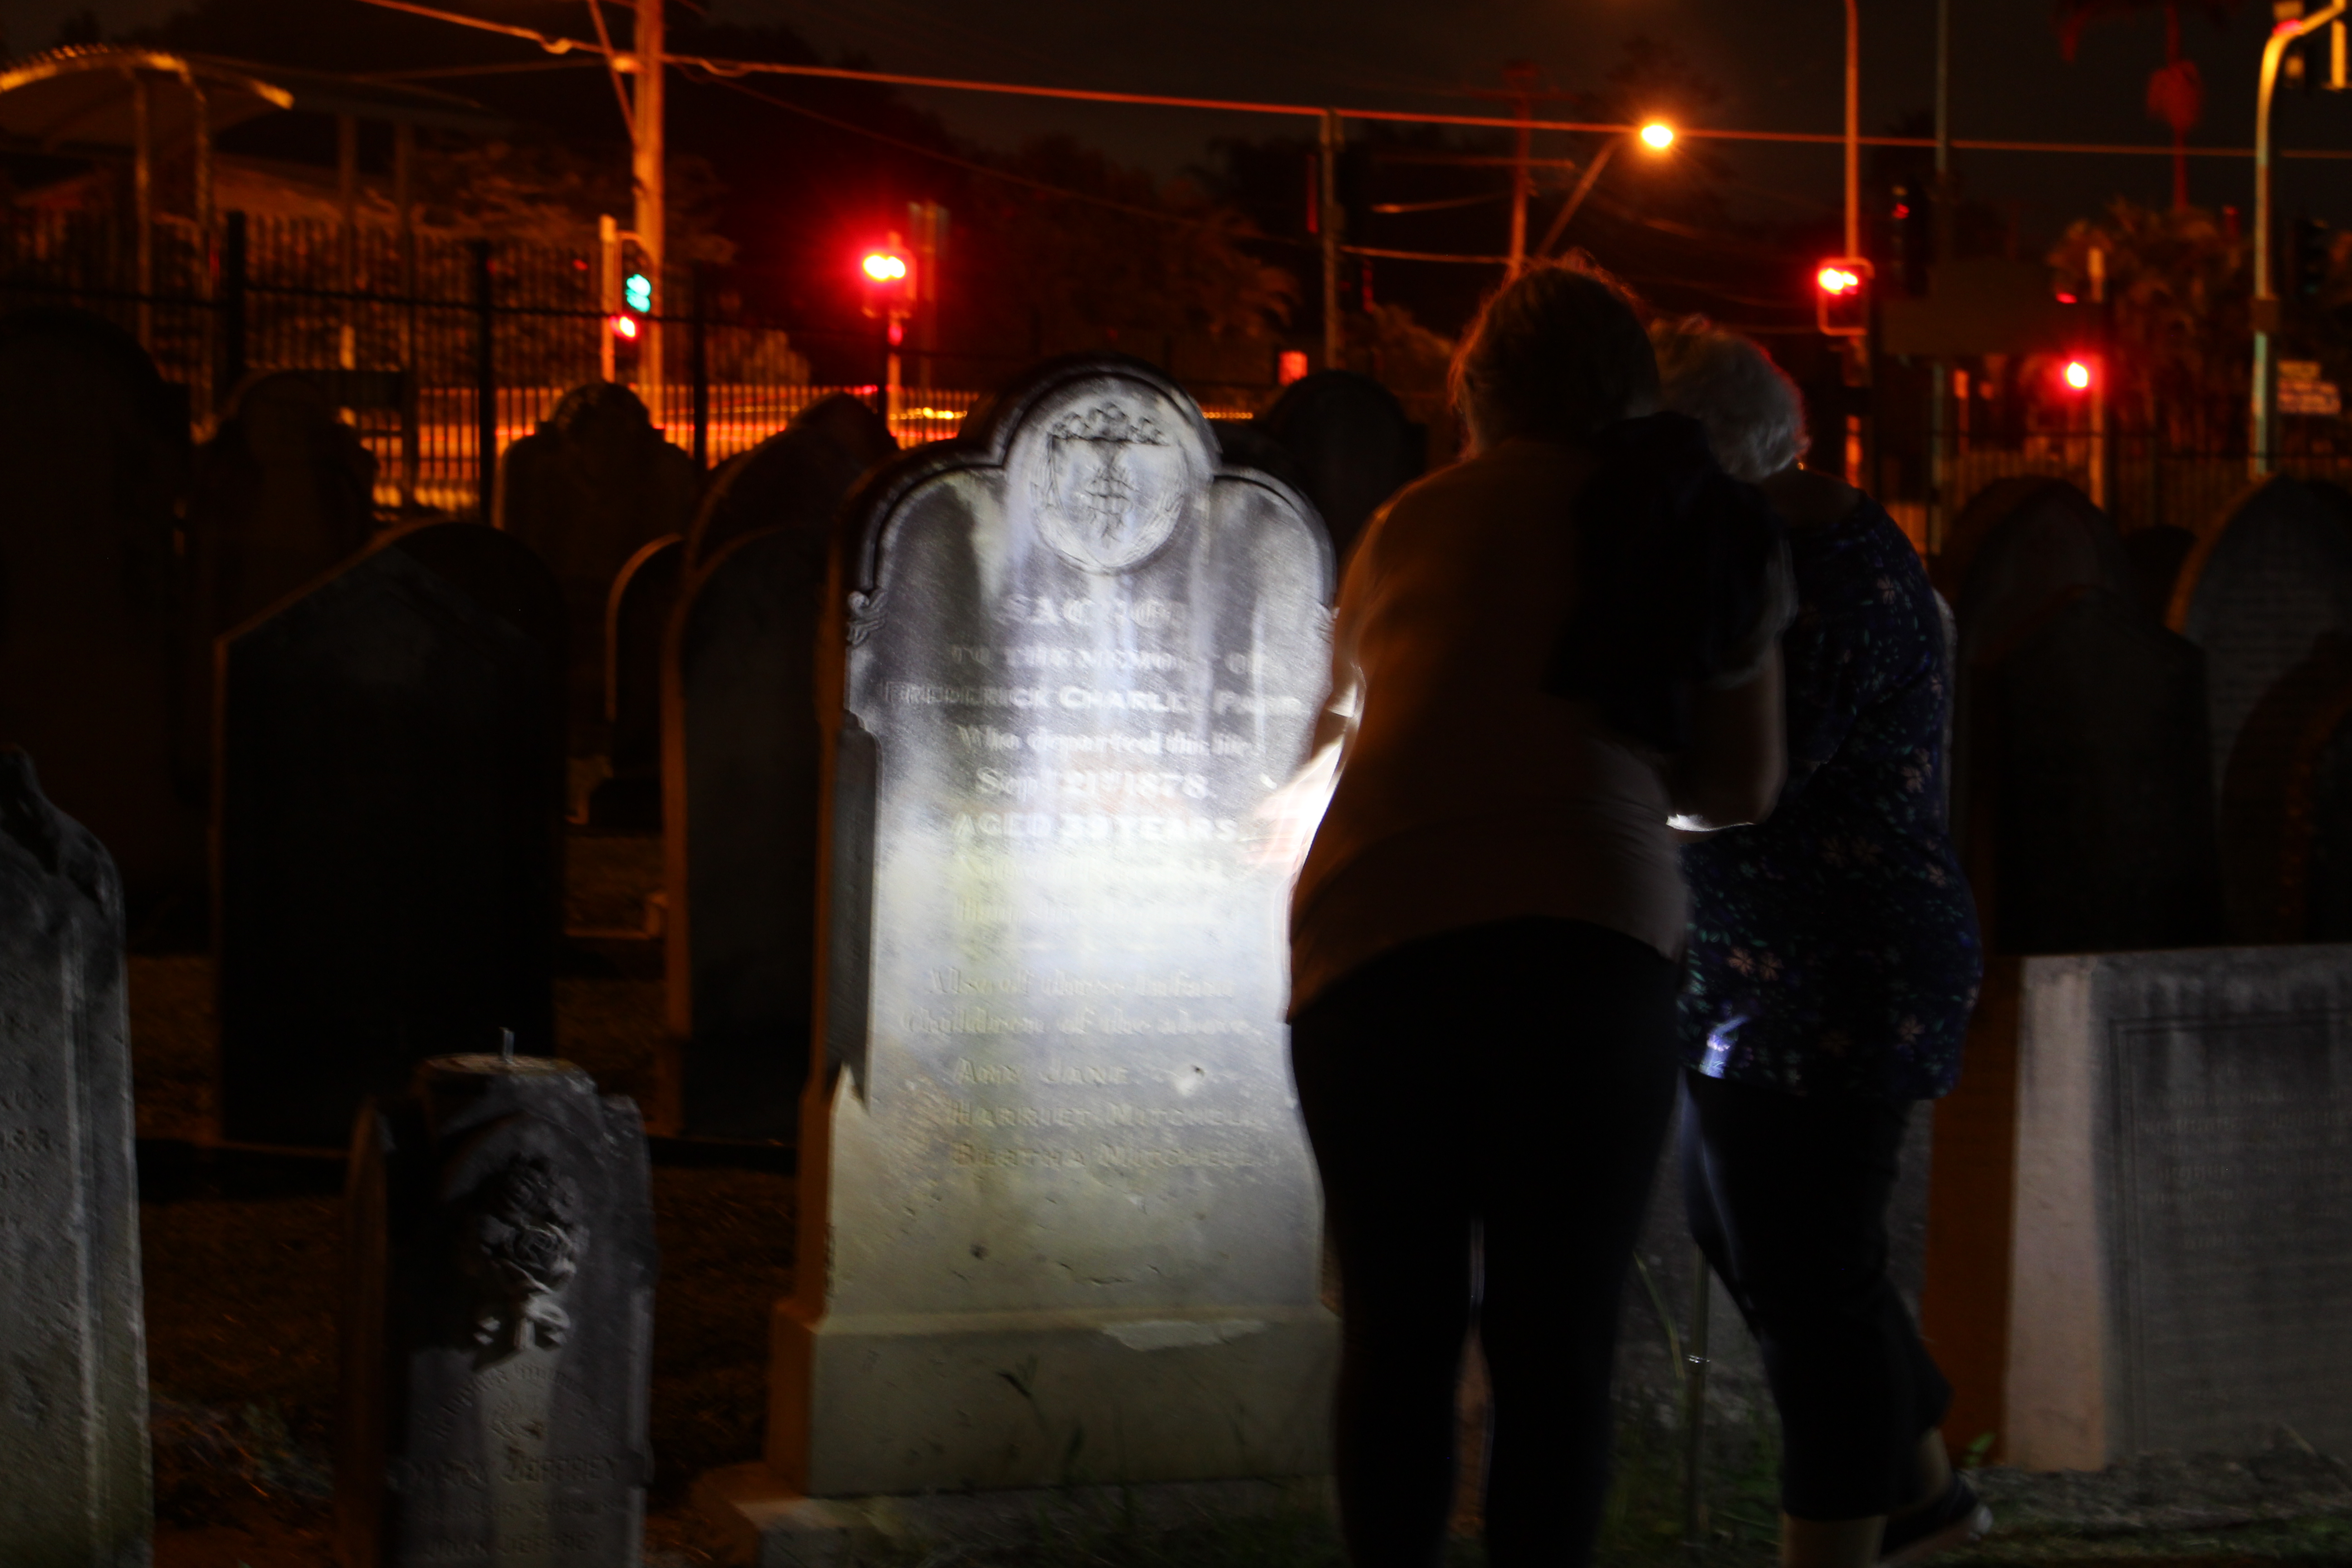 Ipswich Cemetery at night